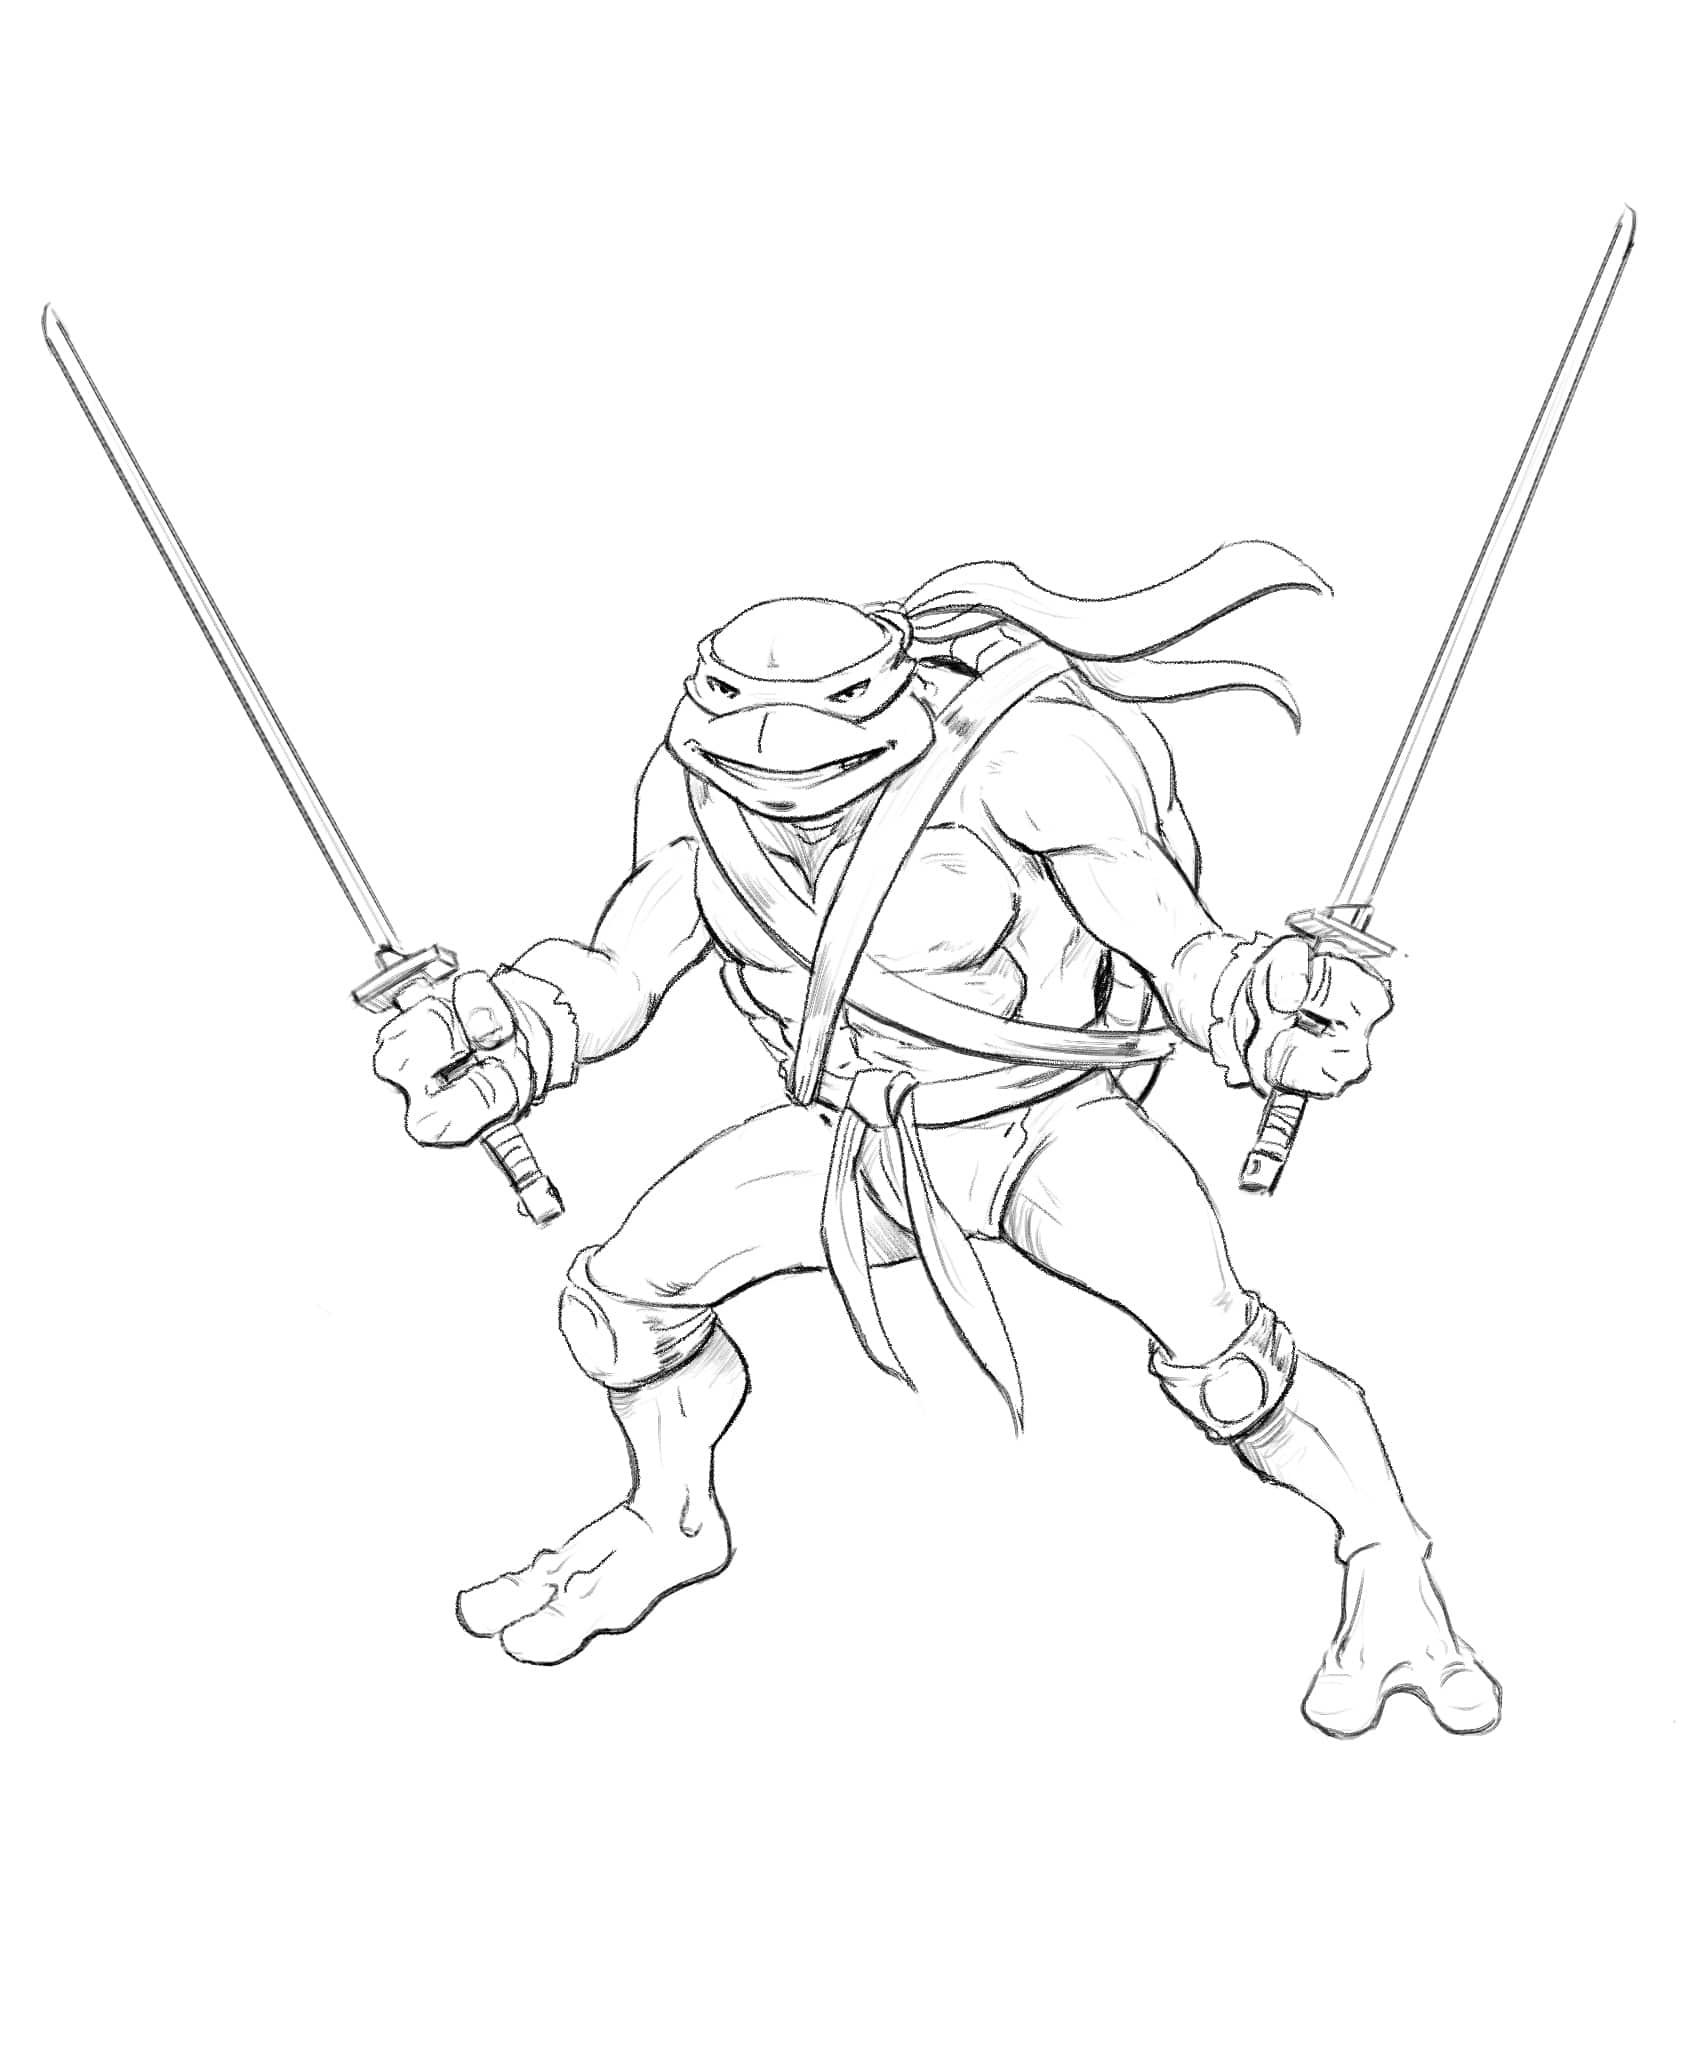 How To Draw Ninja Turtles Nickelodeon Style